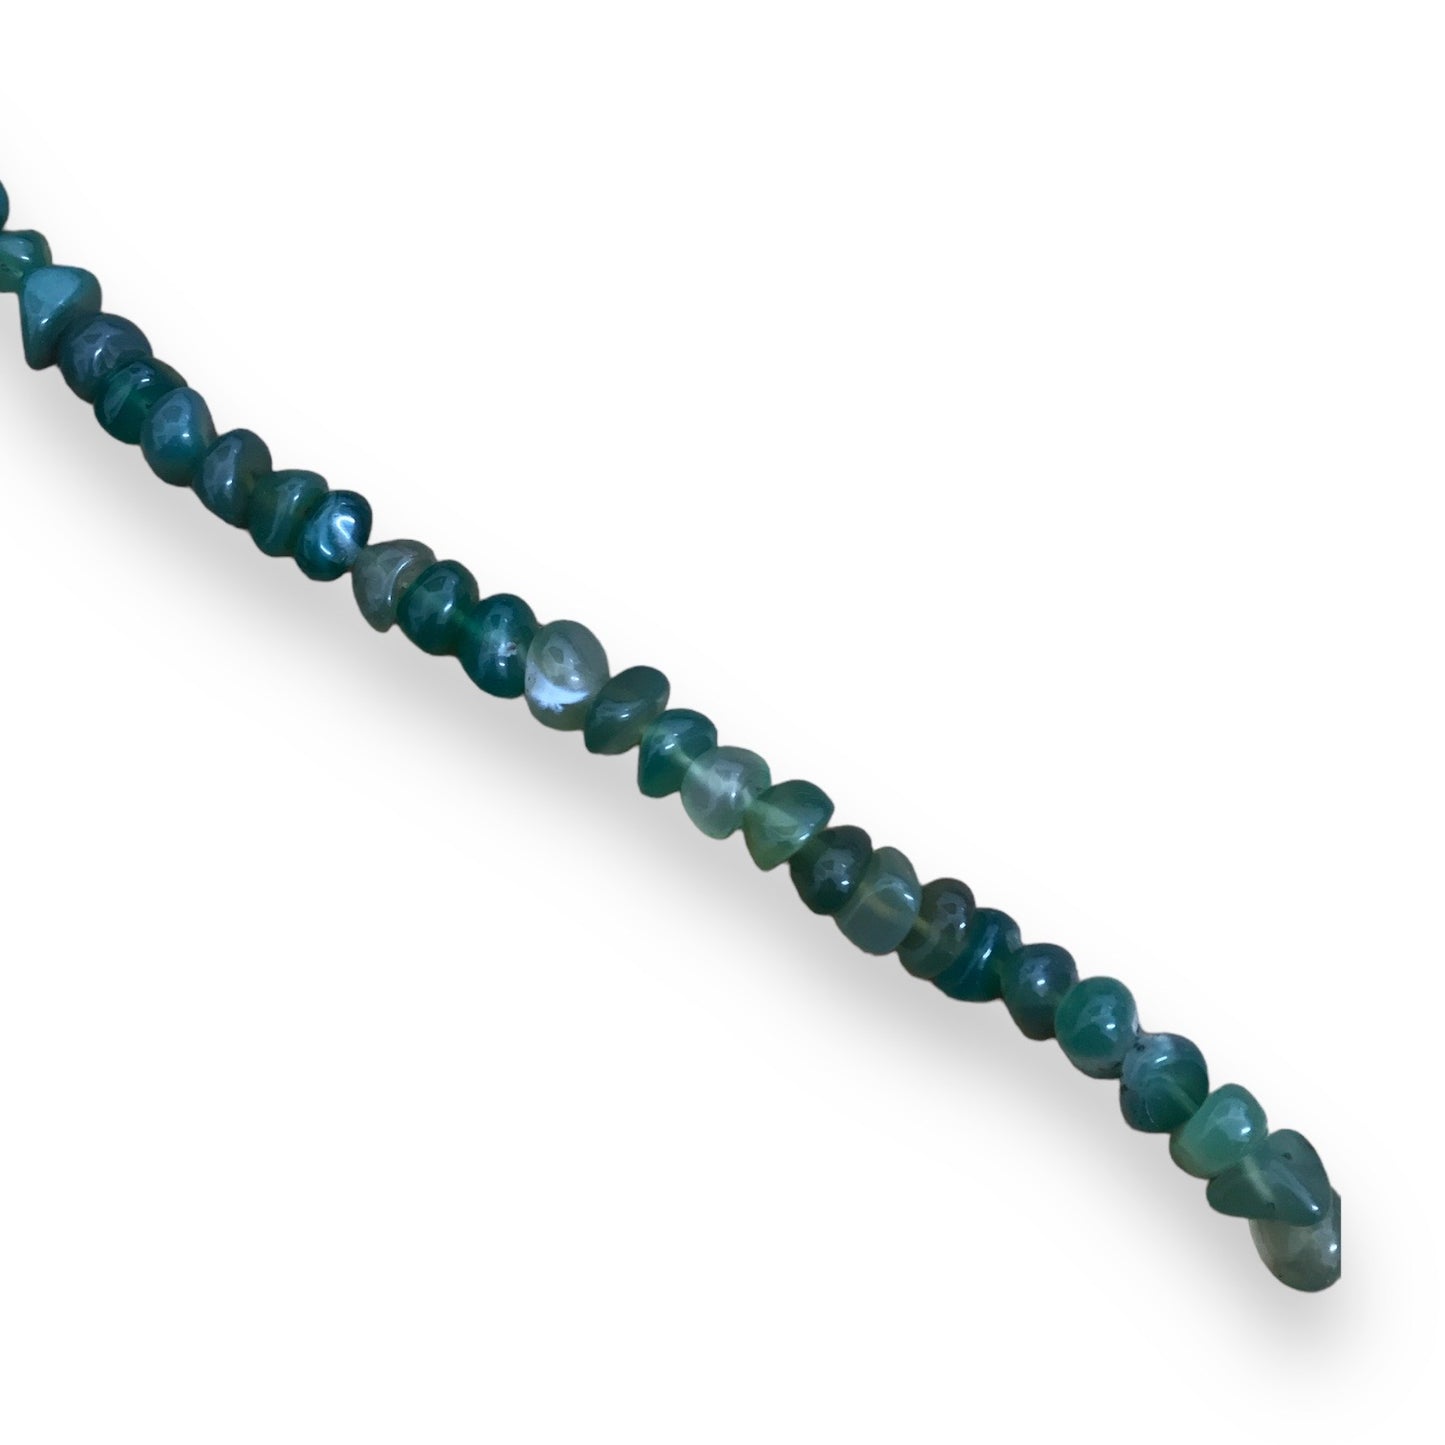 Assorted Green Adventurine Bead Strings